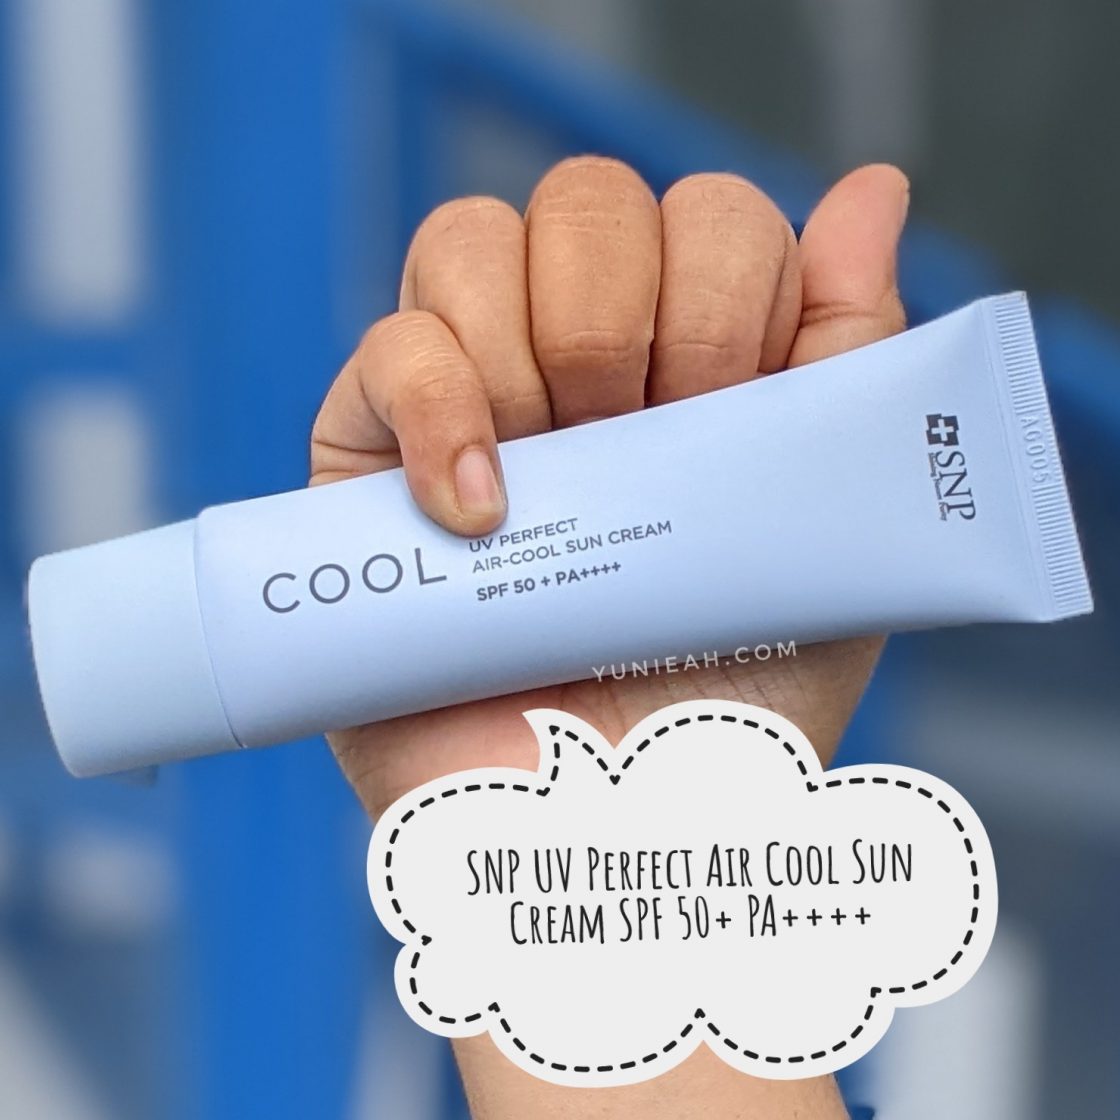 SNP UV PERFECT AIR COOL SUN CREAM REVIEW